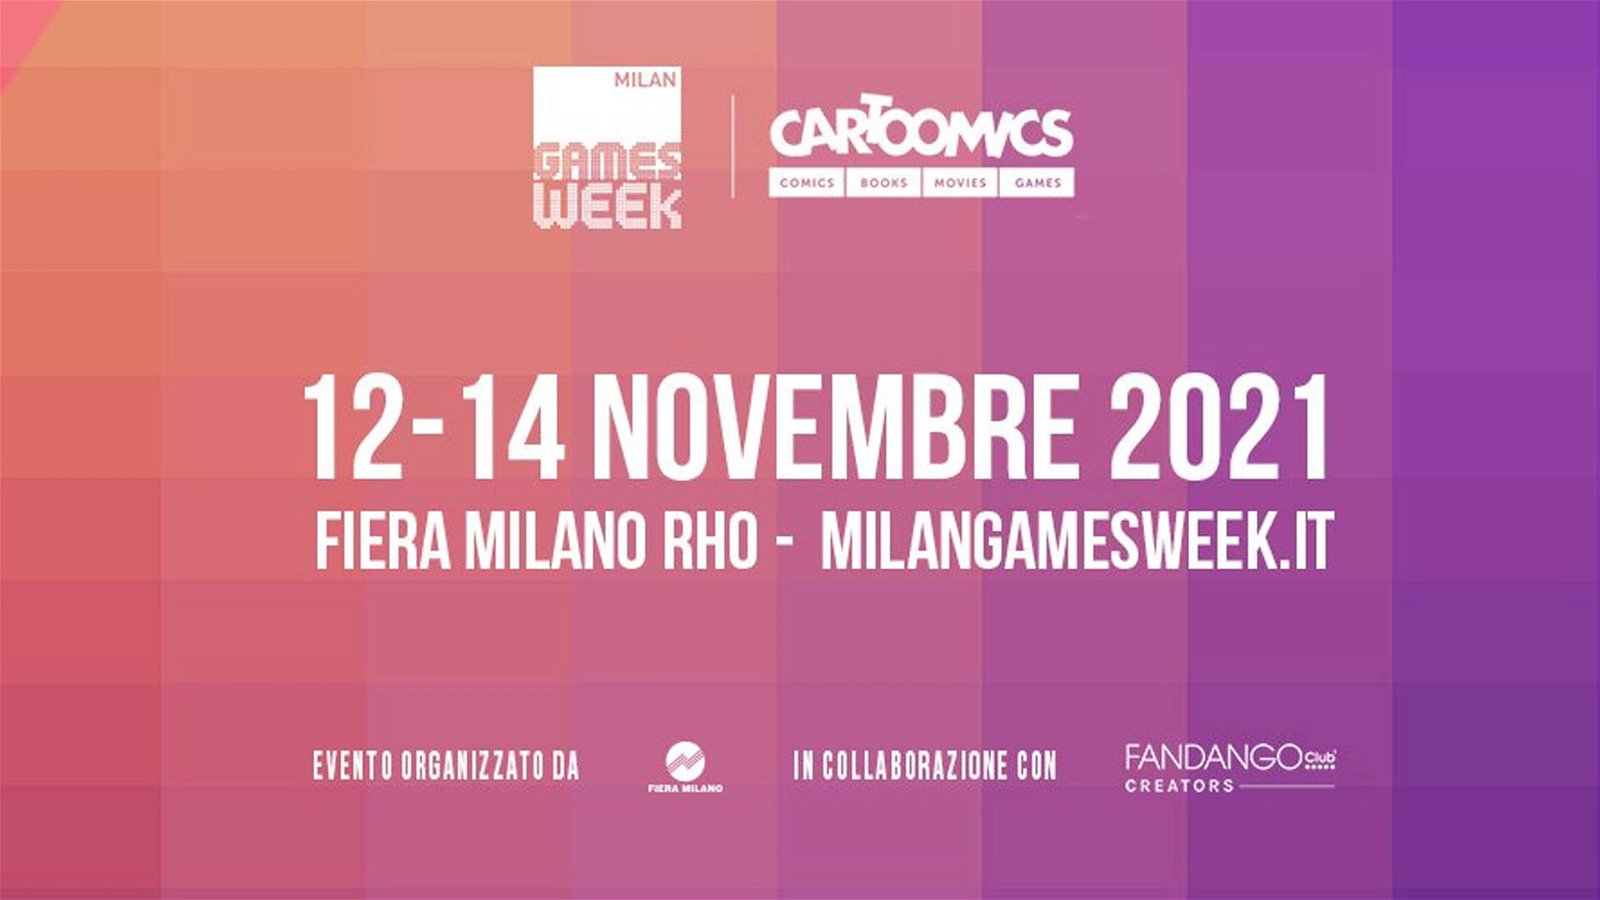 Immagine di Gli influencer presenti alla Milan Games Week